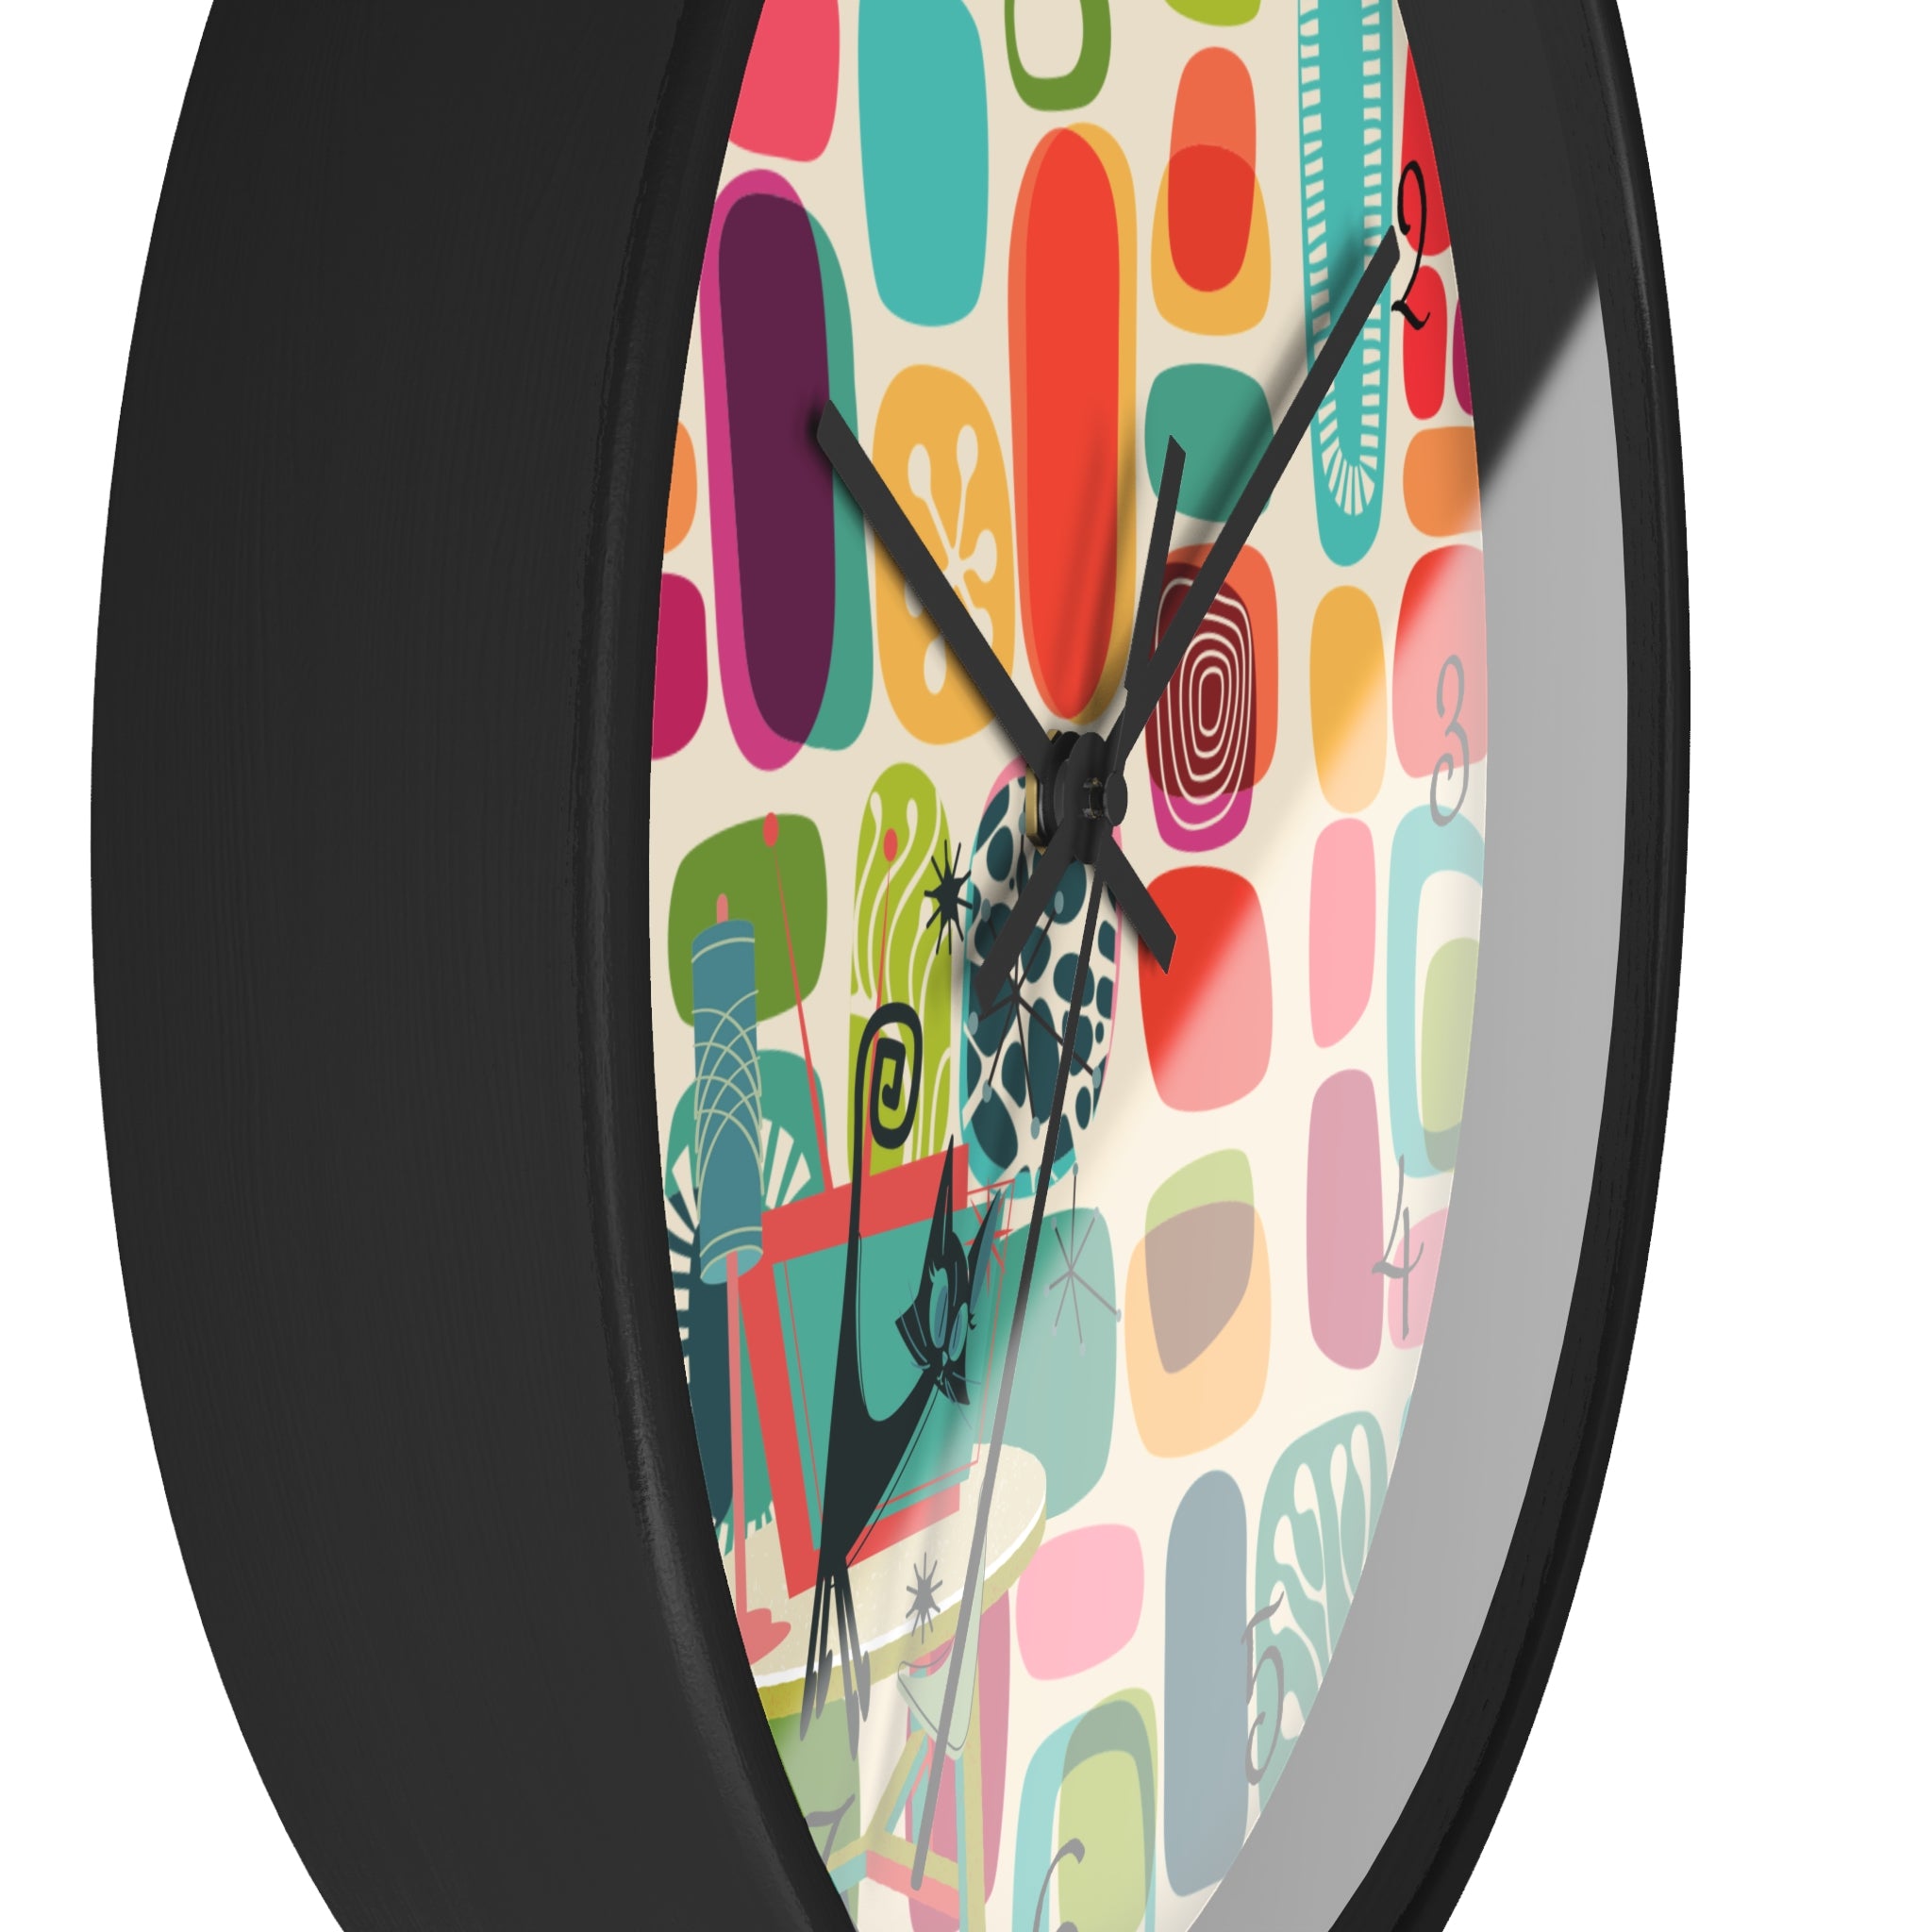 Mid Mod Amoeba Design With Kitschy Atomic Cat, Quirky Fun Retro Wall Clock